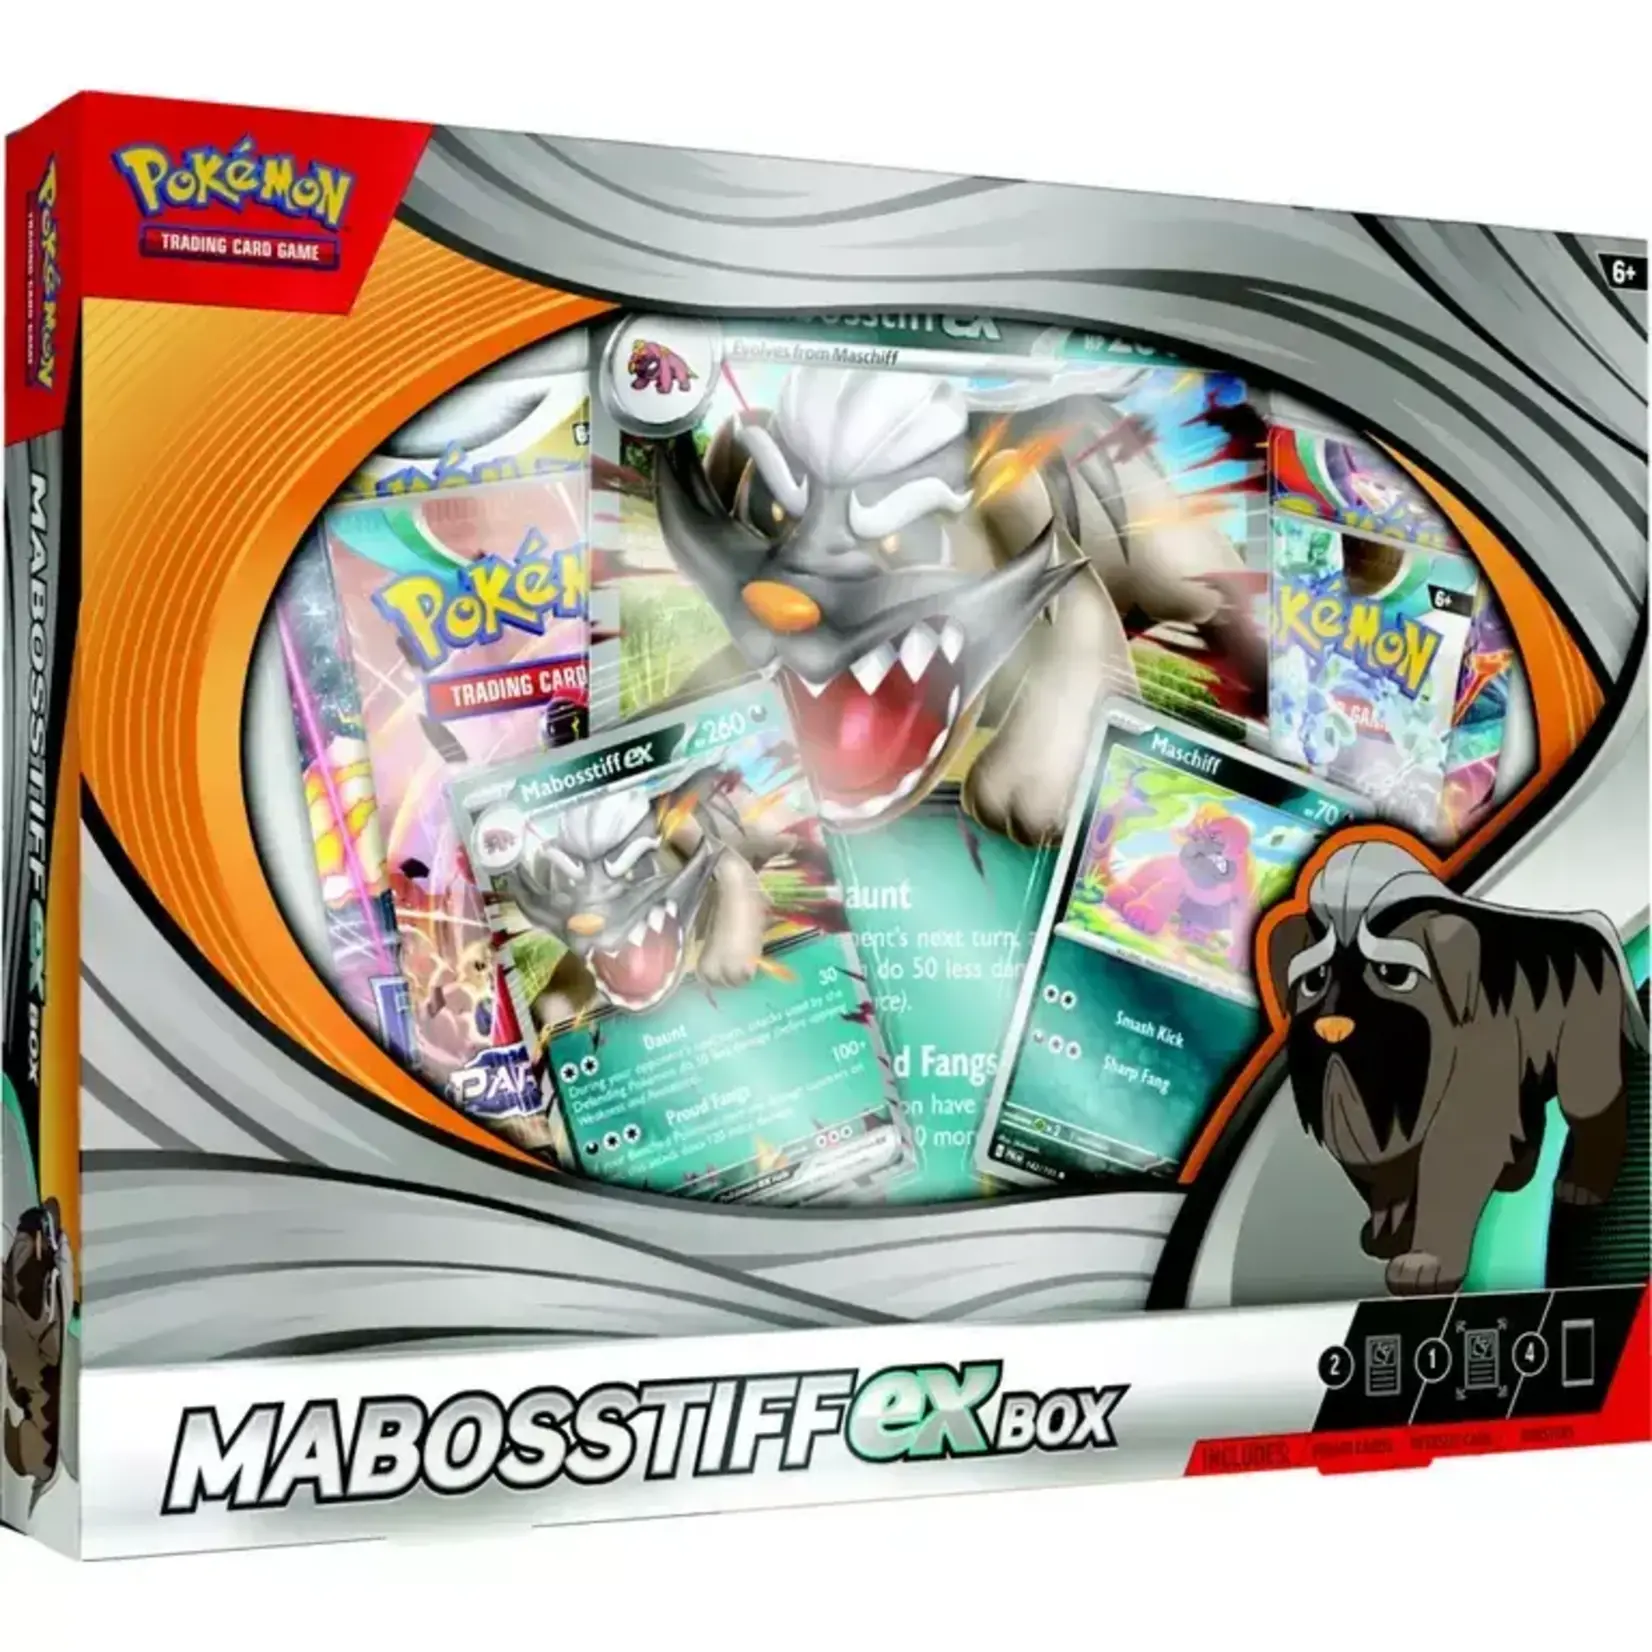 Pokemon Pokemon TCG: Mabosstiff ex Box